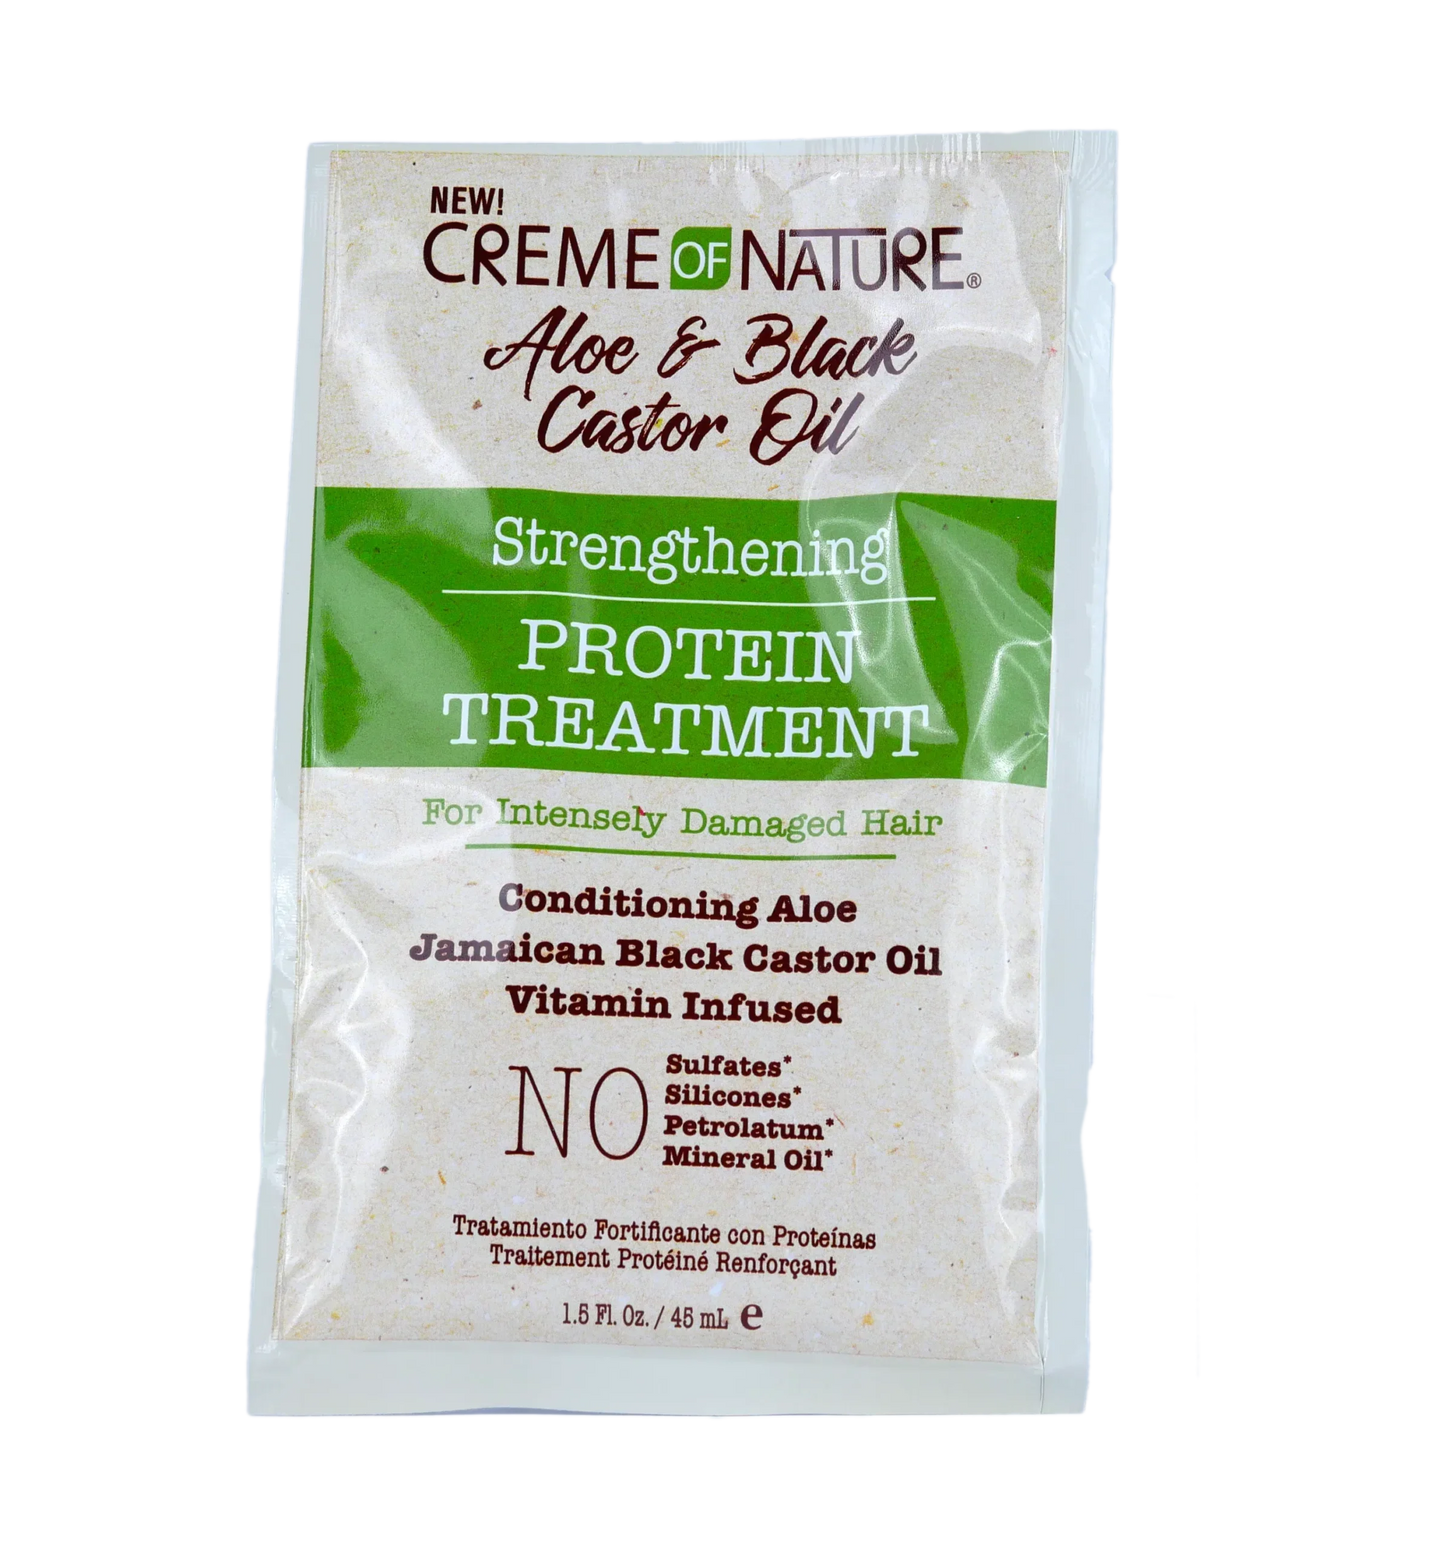 Creme Of Nature Aloe & Black Castor Oil Strengthening Protein Treatment